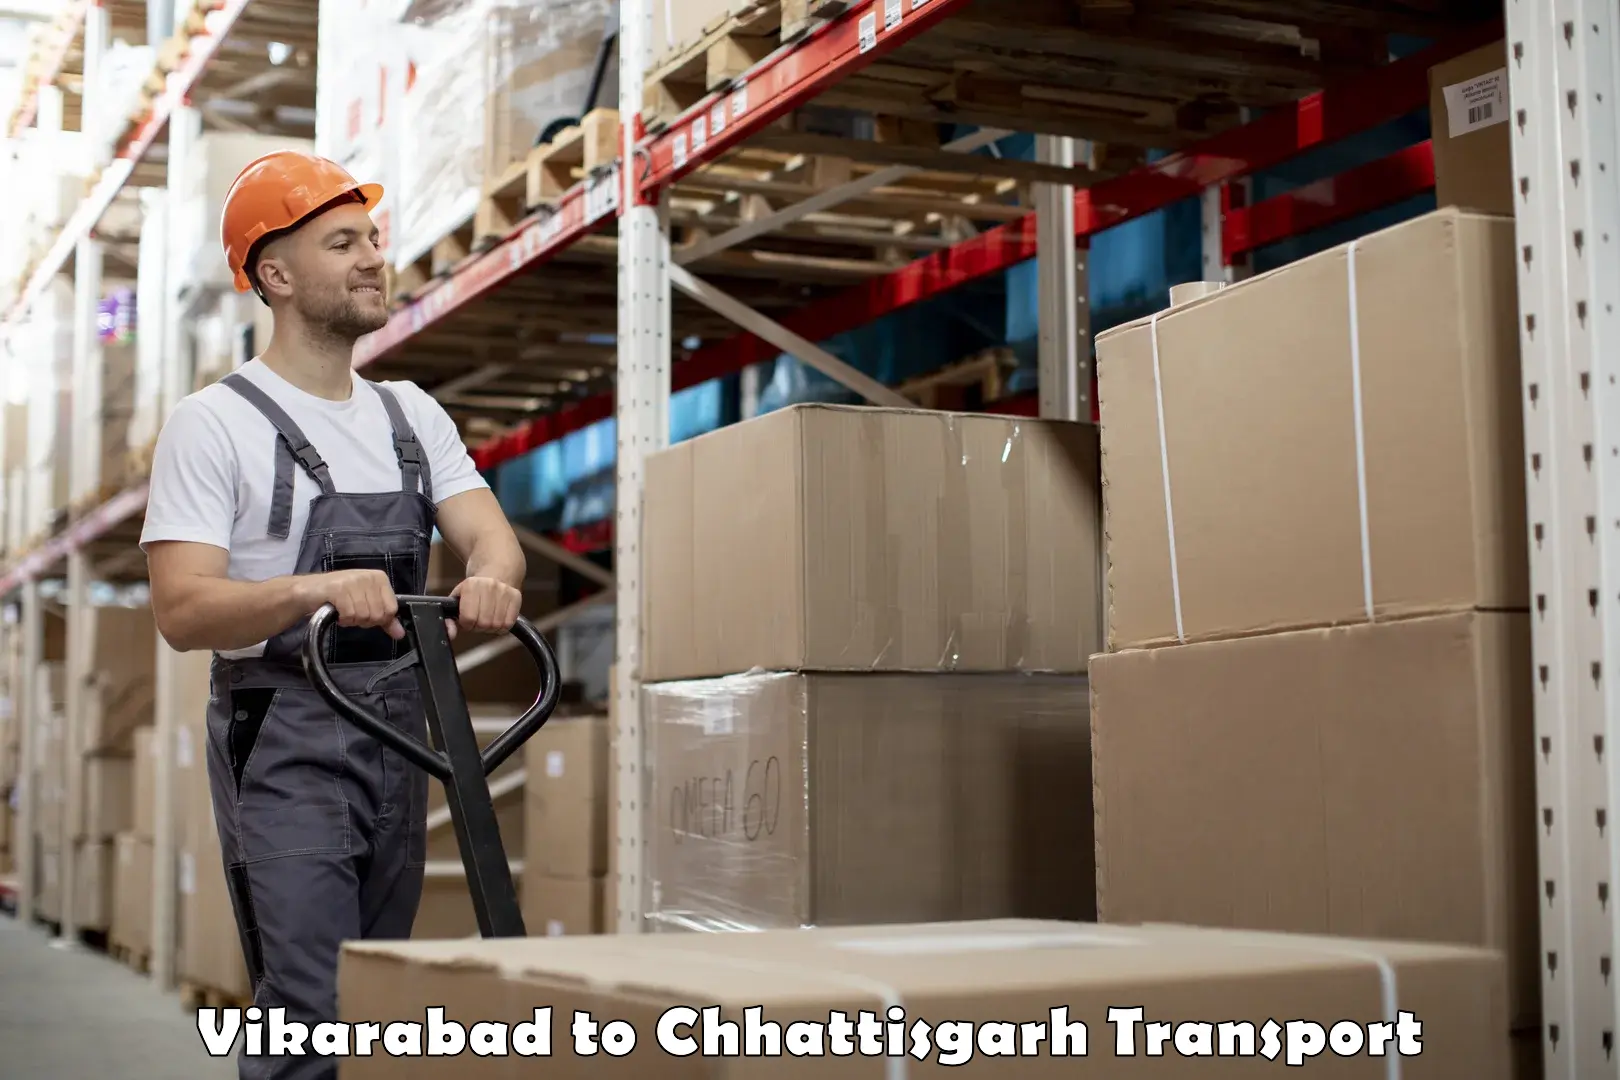 Truck transport companies in India Vikarabad to Korba